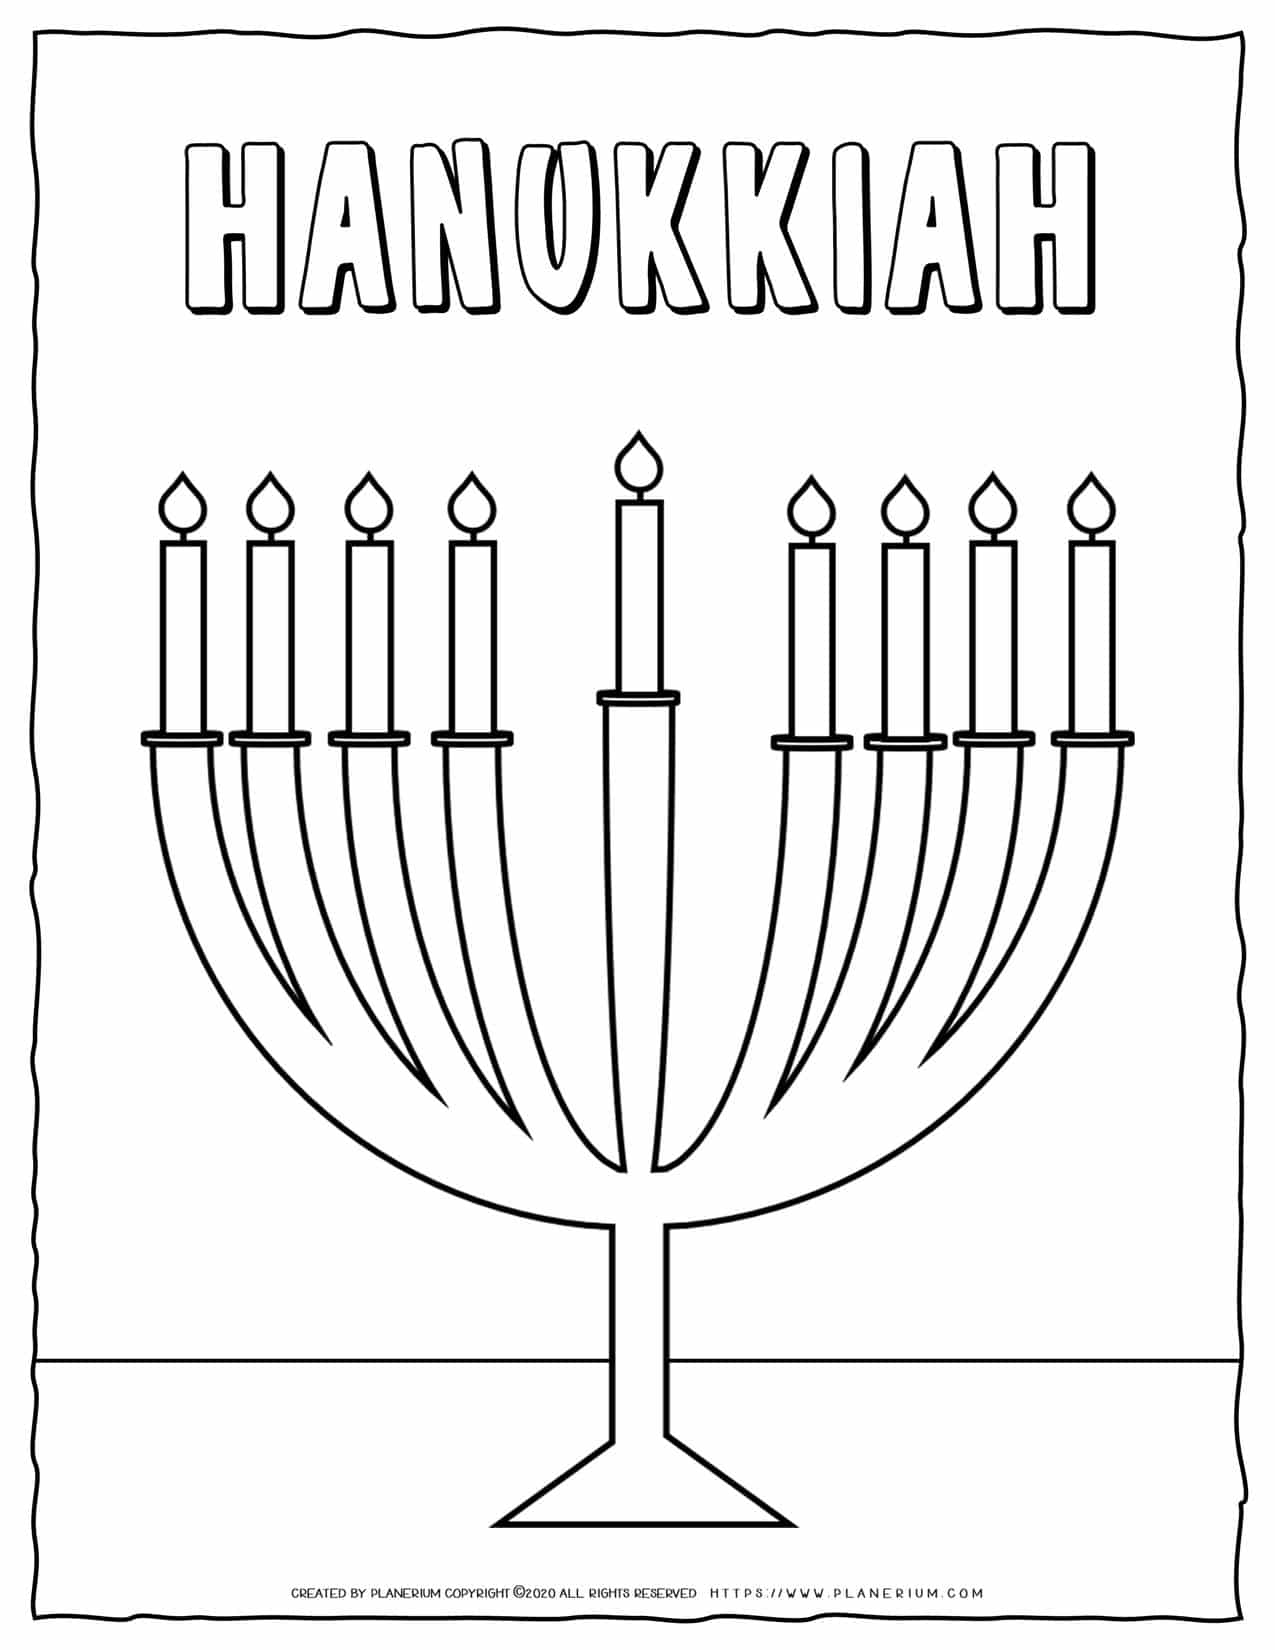 Hanukkah Menorah Coloring Page FREE Printable Planerium